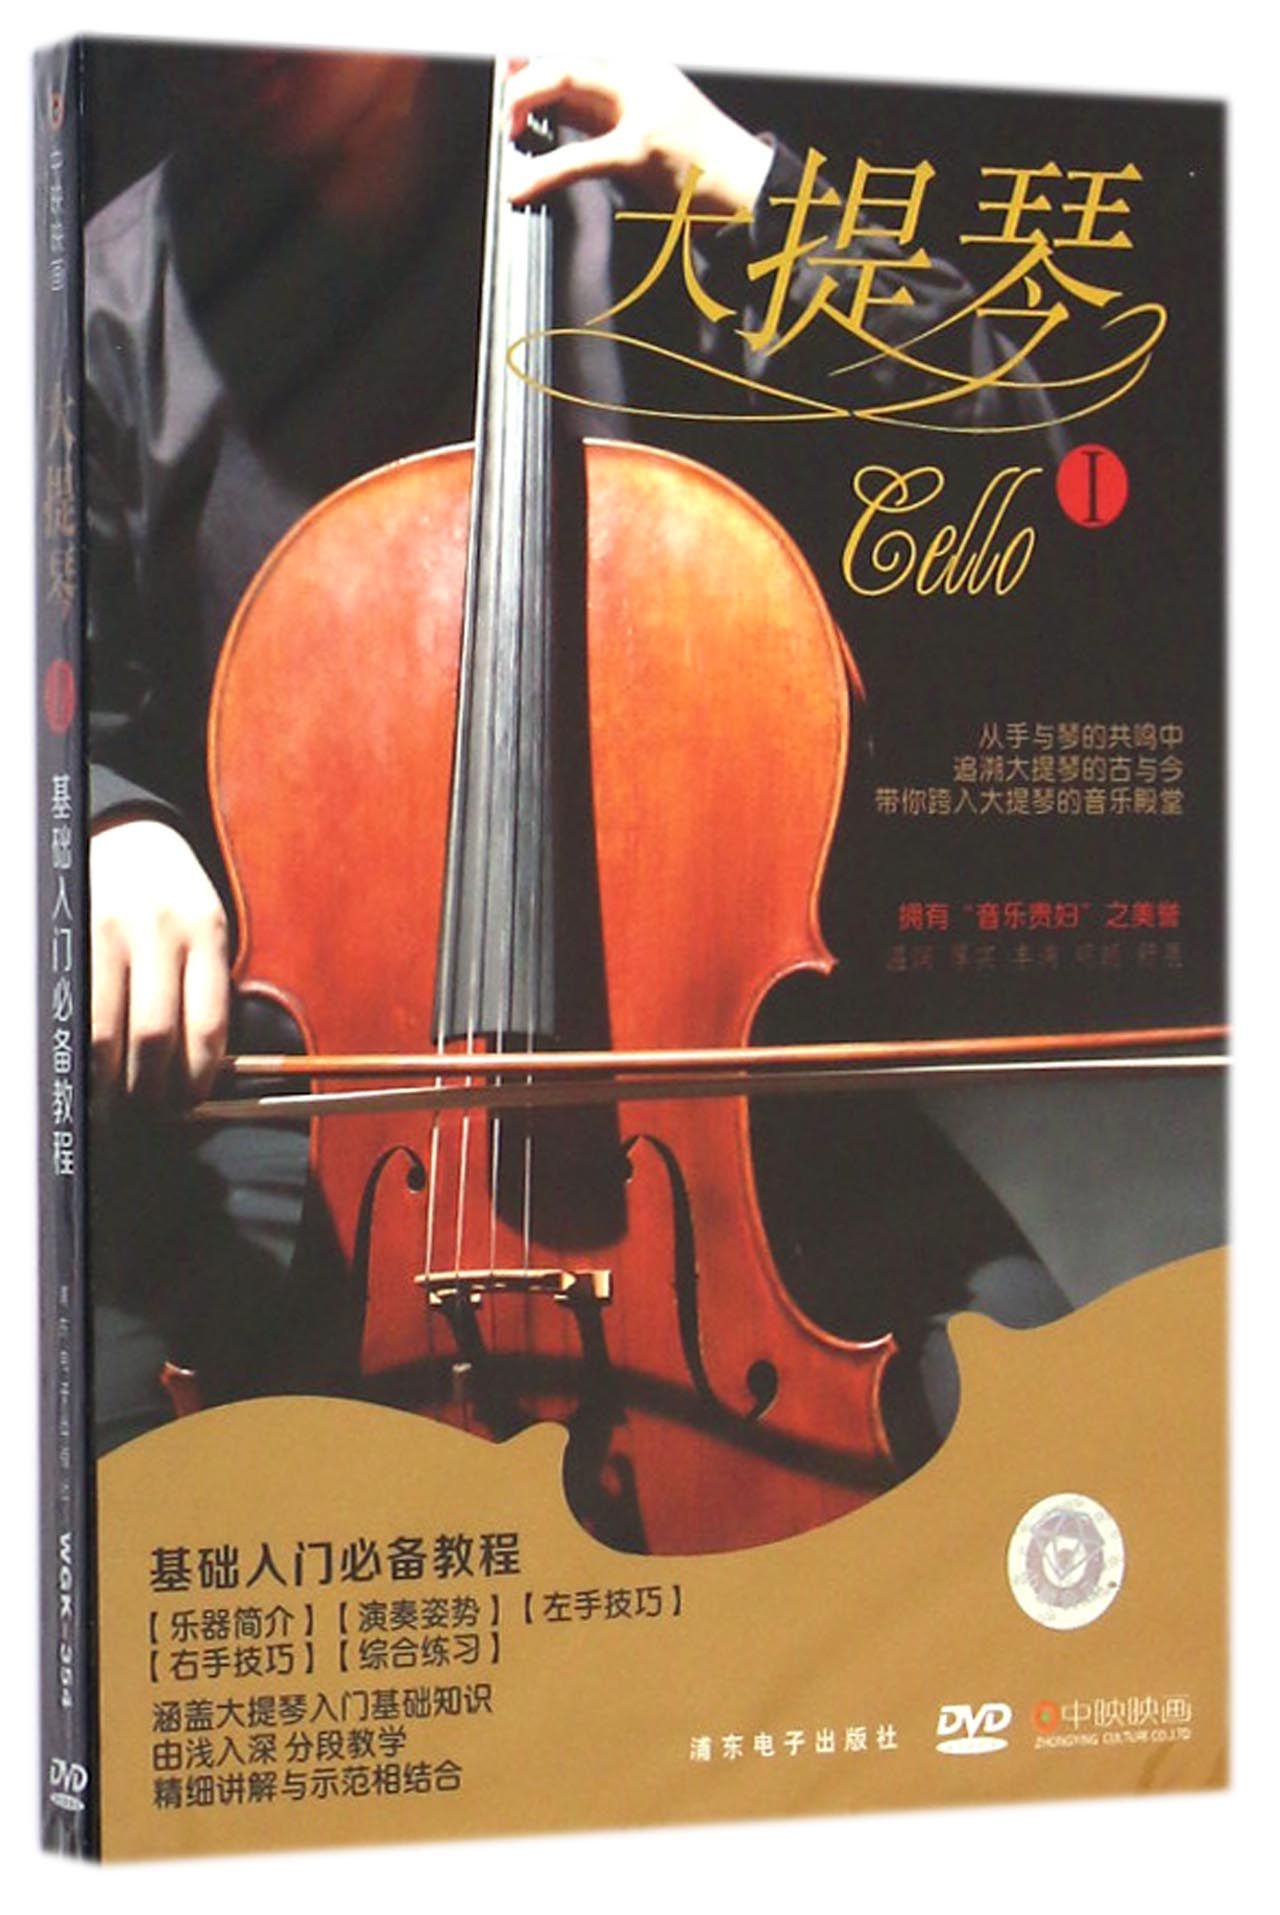 DVD大提琴 Ⅰ 基础入门必备教程(水晶版)-博库